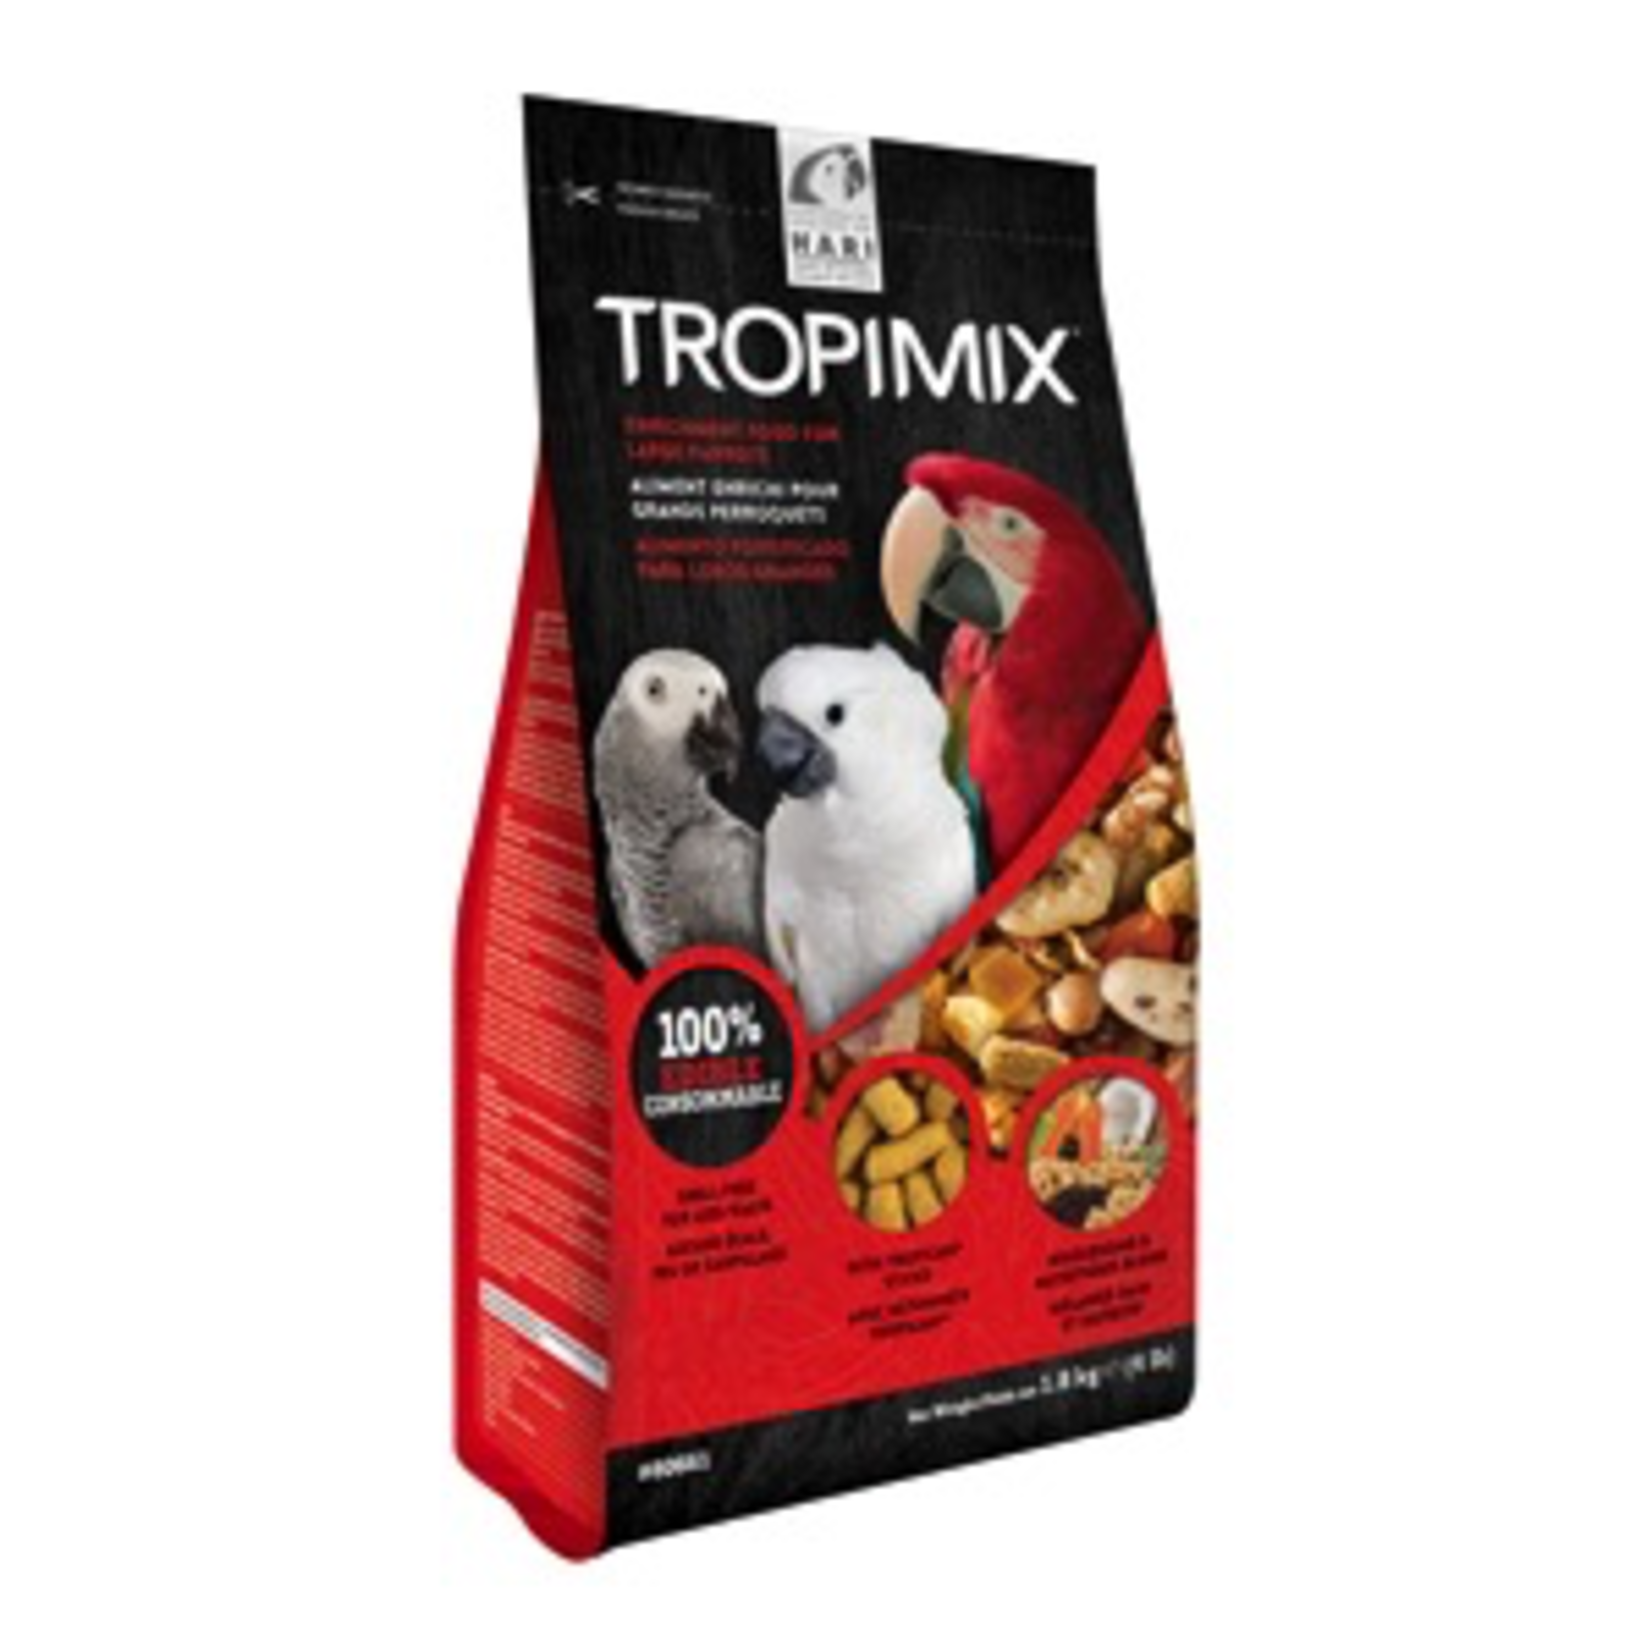 TROPICAN Tropimix Formula for Large Parrots - 1.8 kg (4 lb)